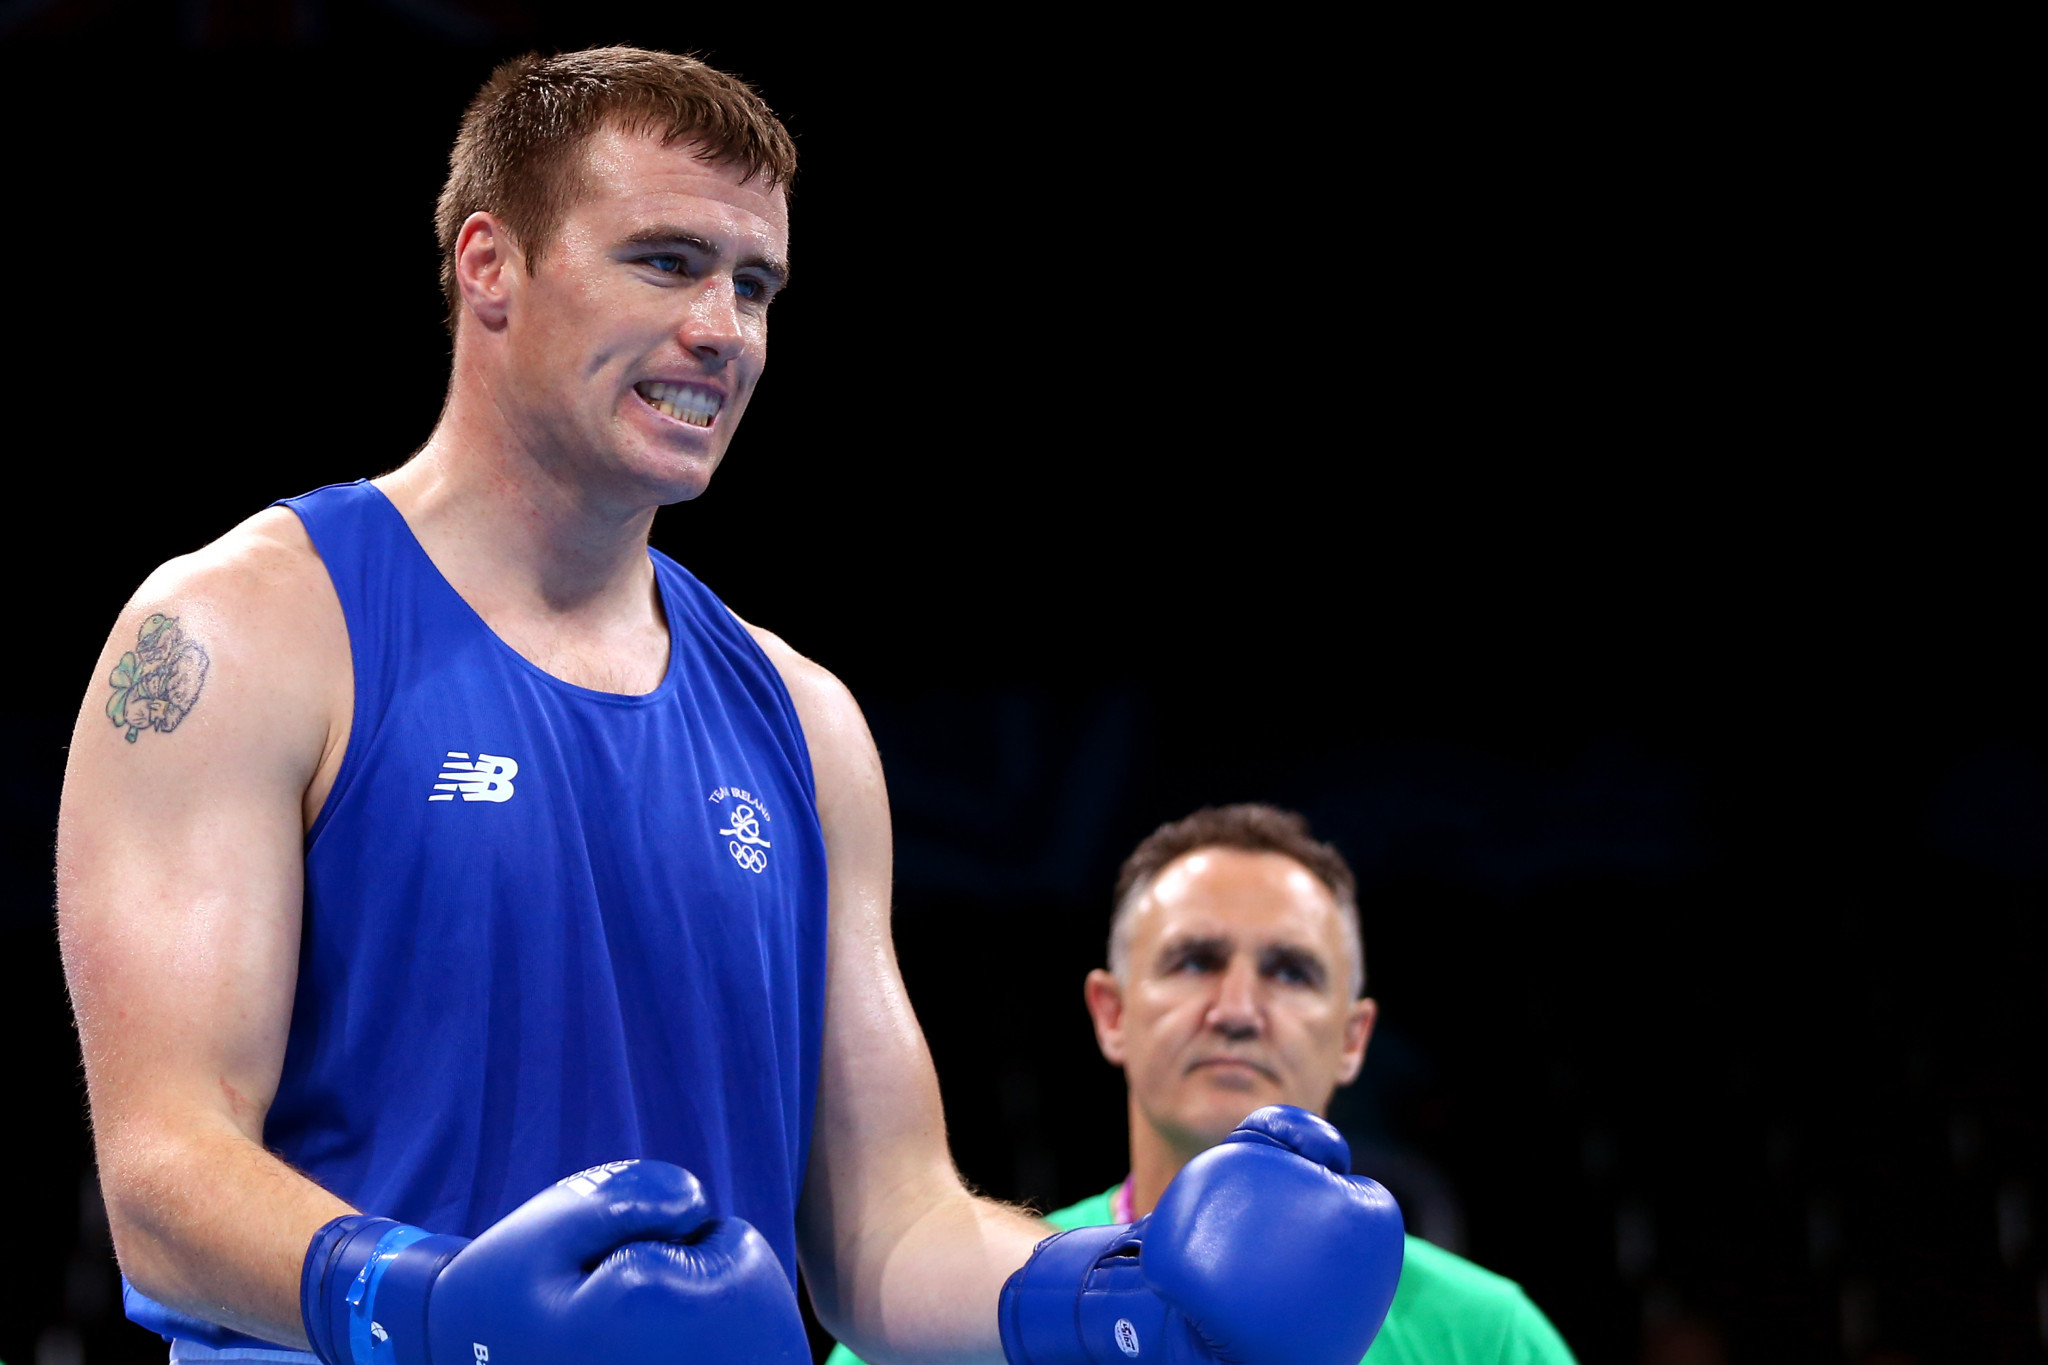 Irish super-heavyweight Gardiner quits boxing ahead of Tokyo 2020 qualifiers